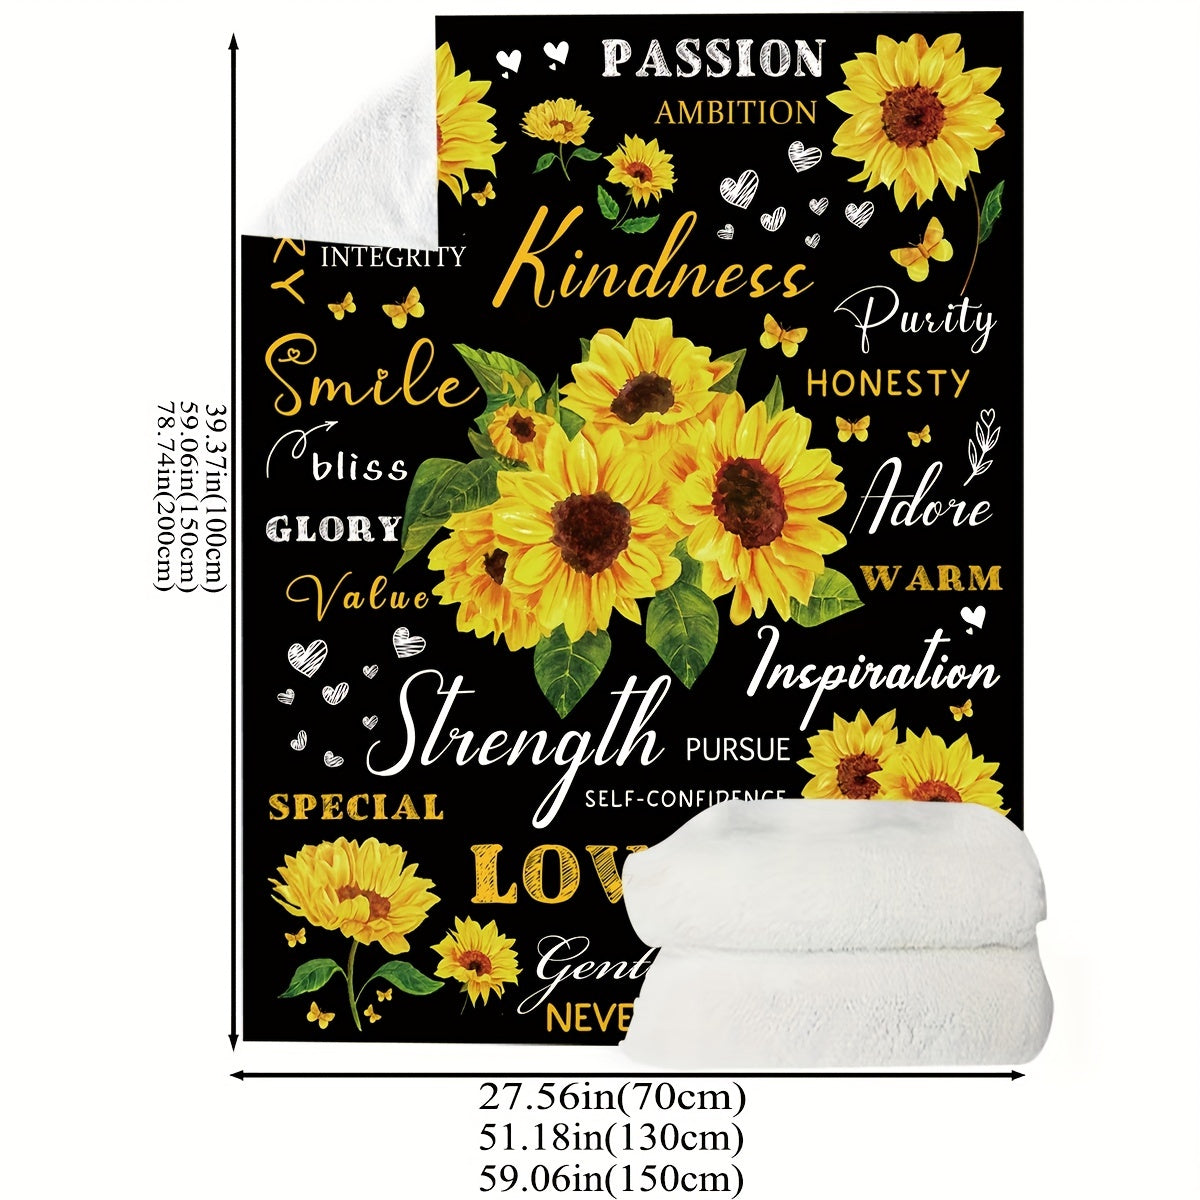 Positive Affirmations & Values Christian Flannel Blanket claimedbygoddesigns